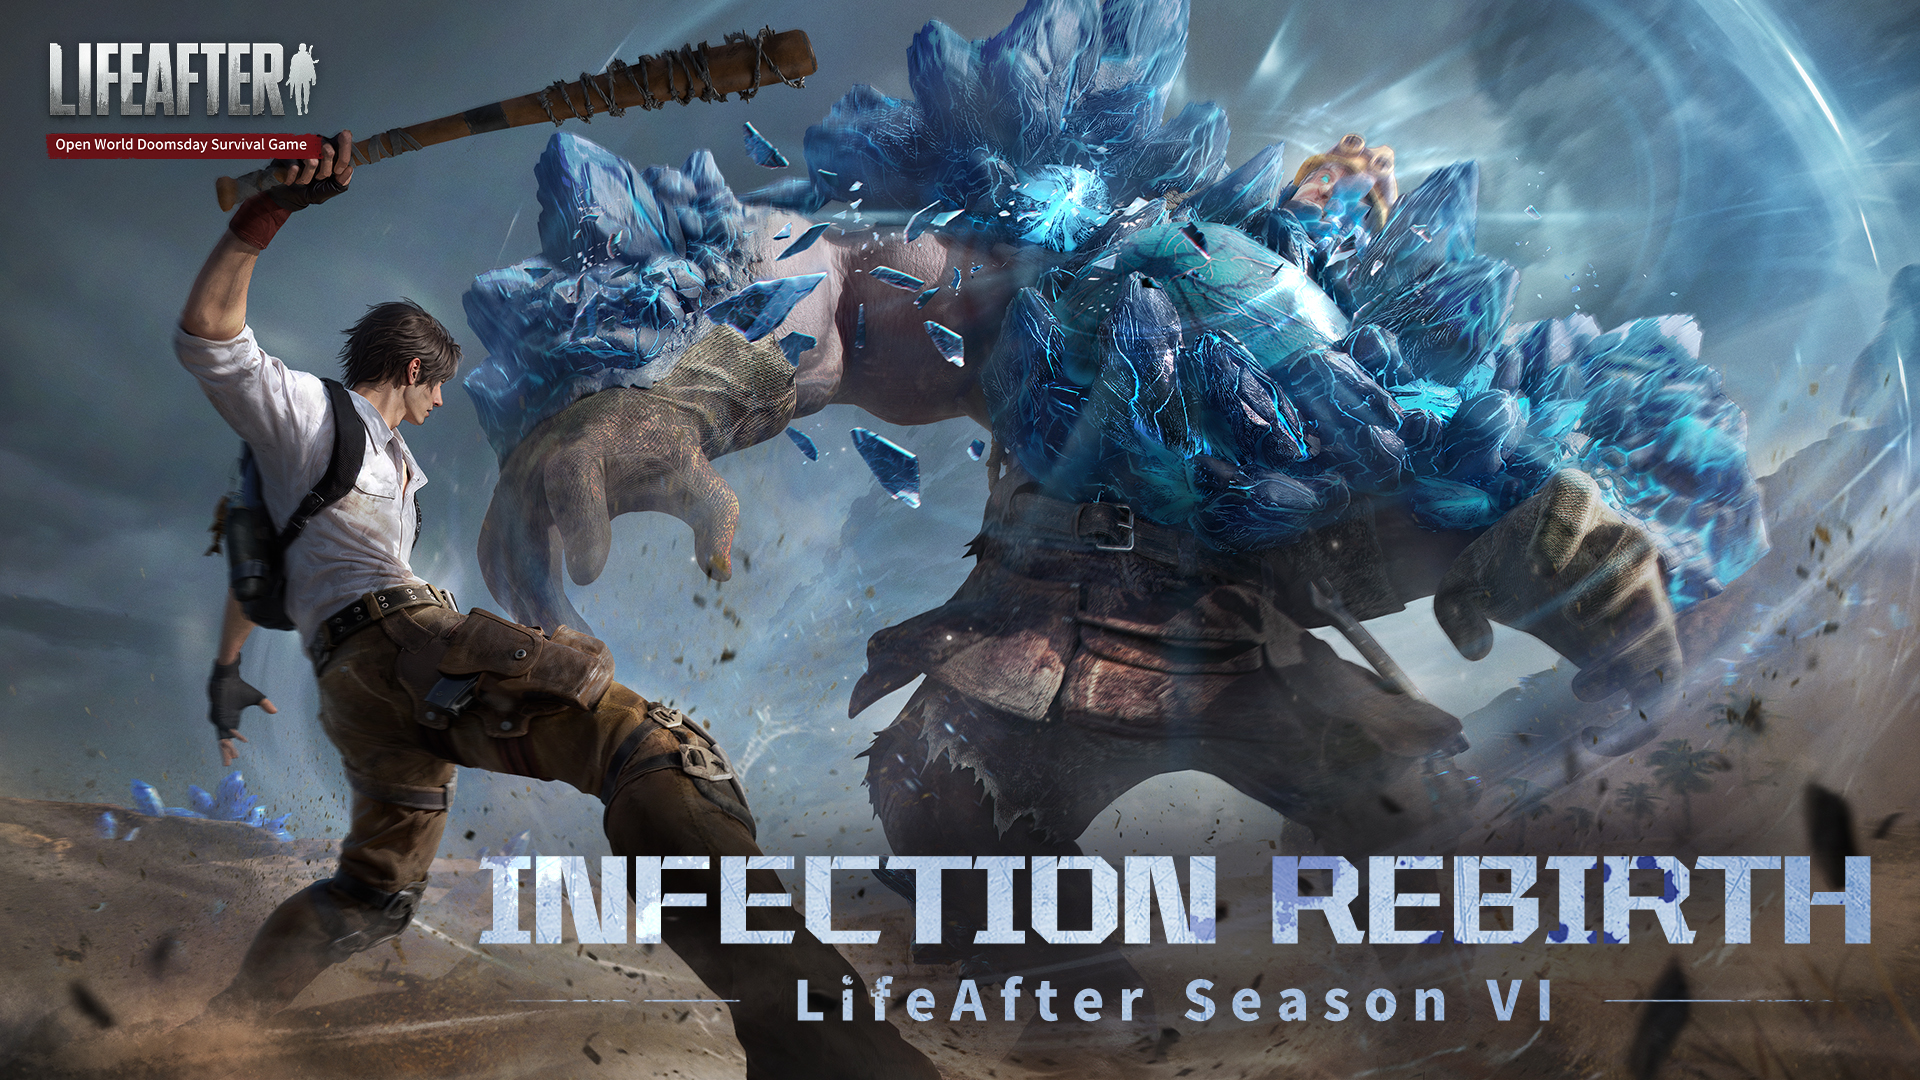 Season 4: Infection Launch